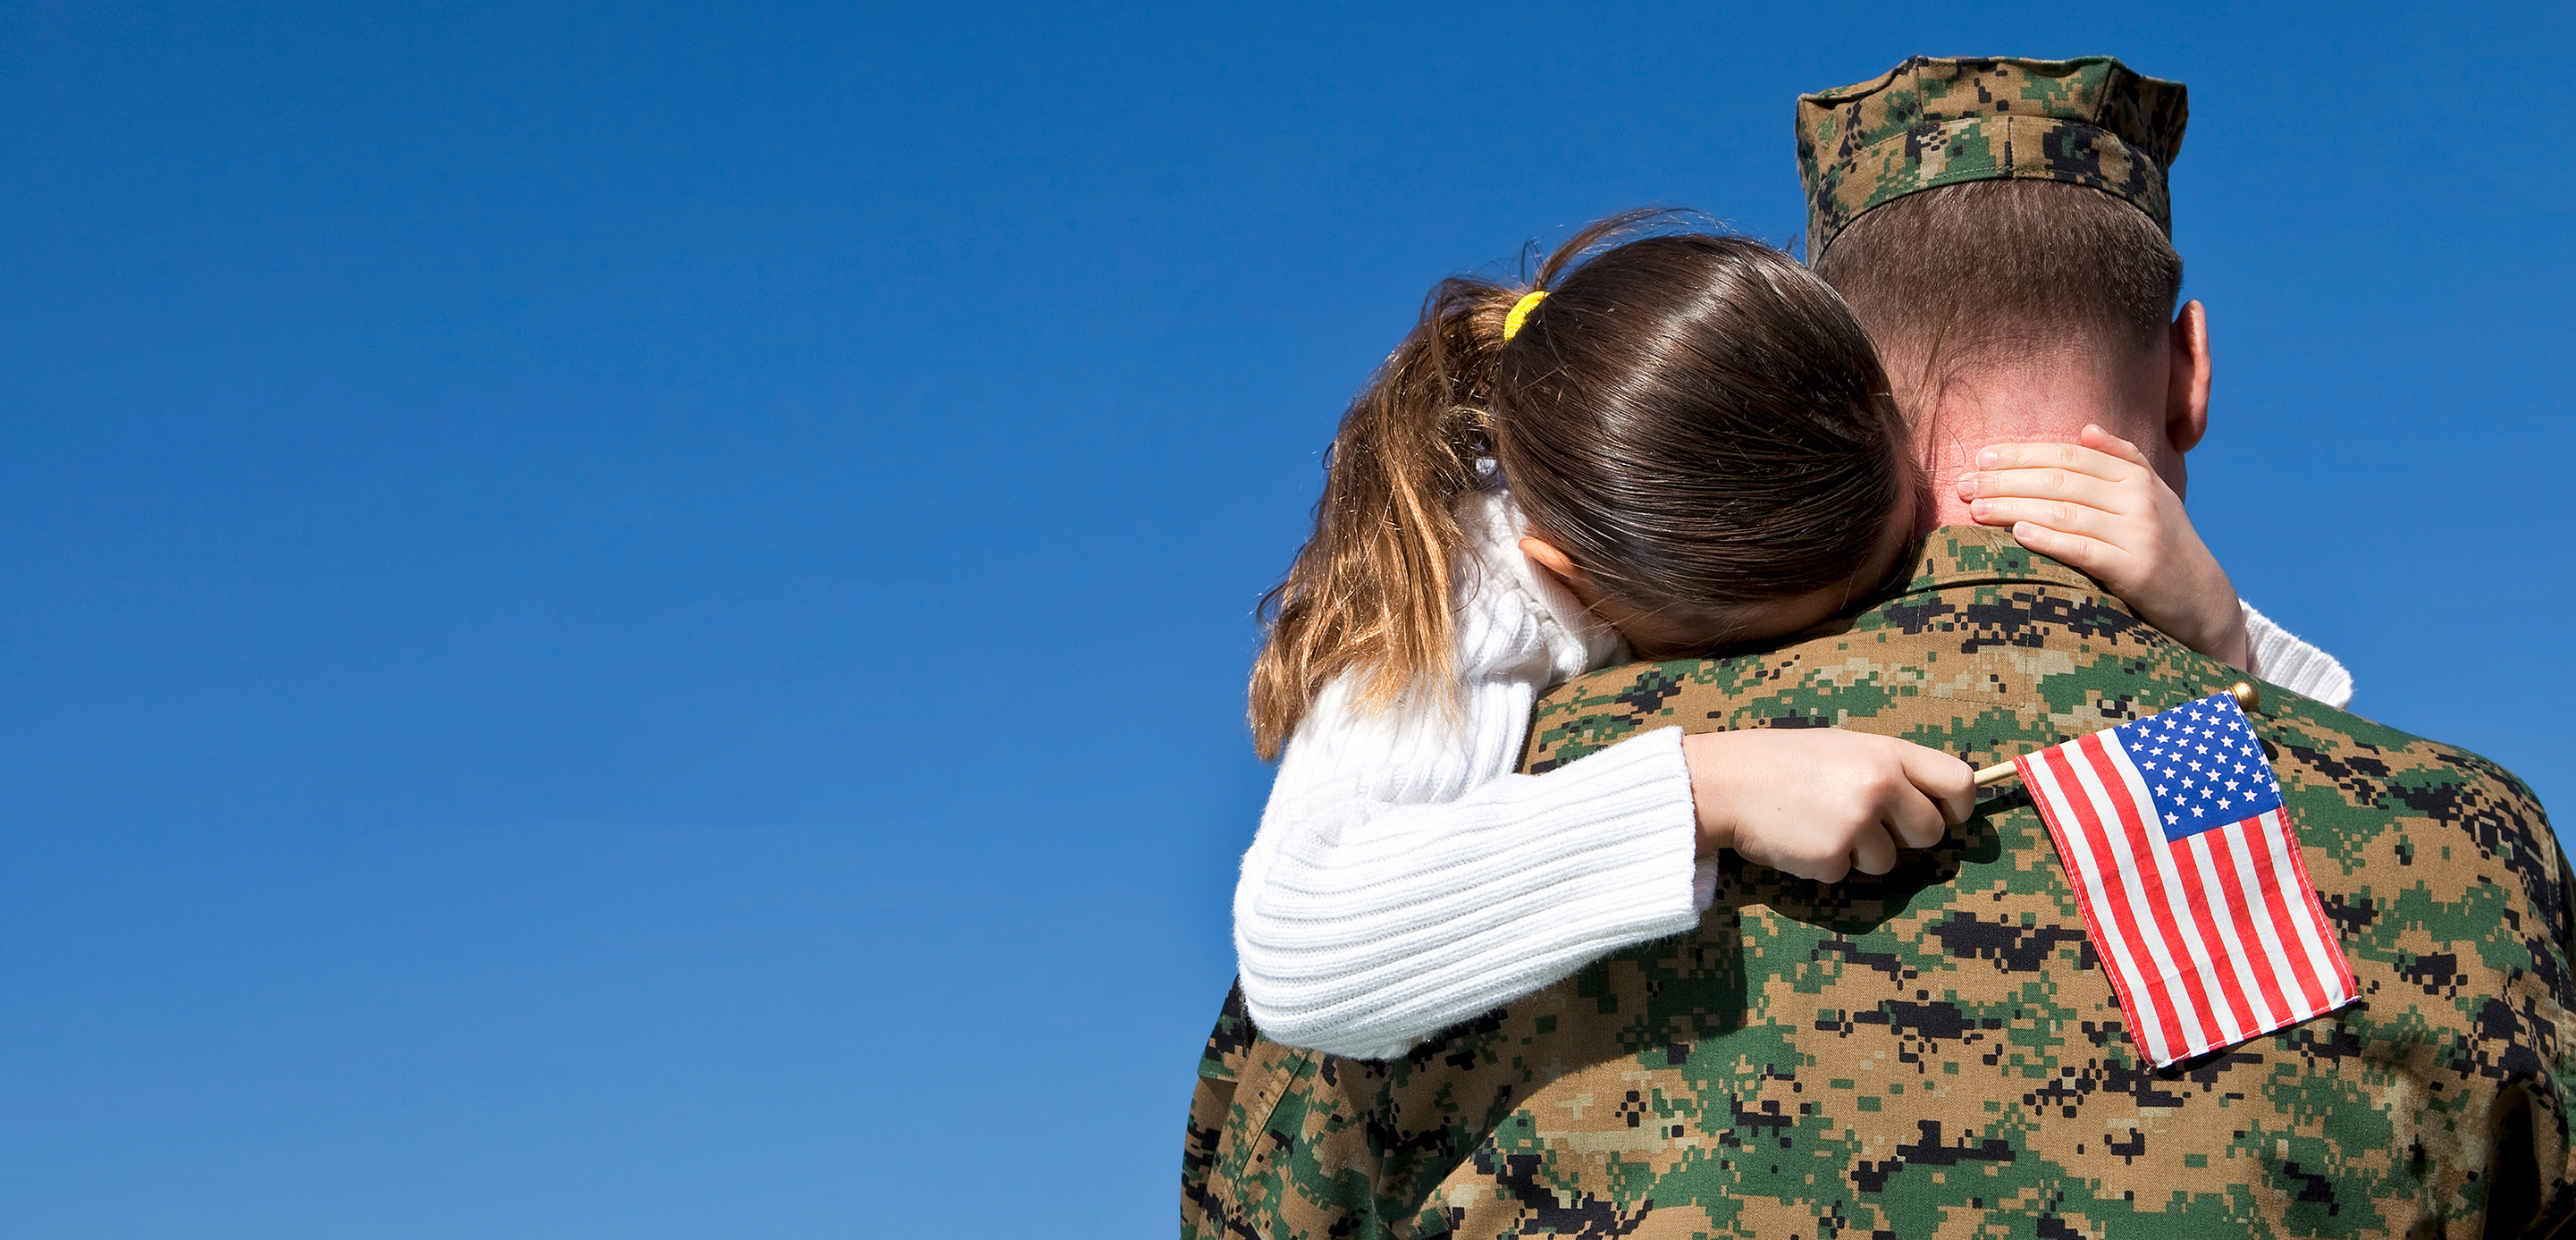 Girl hugging military man with American flag